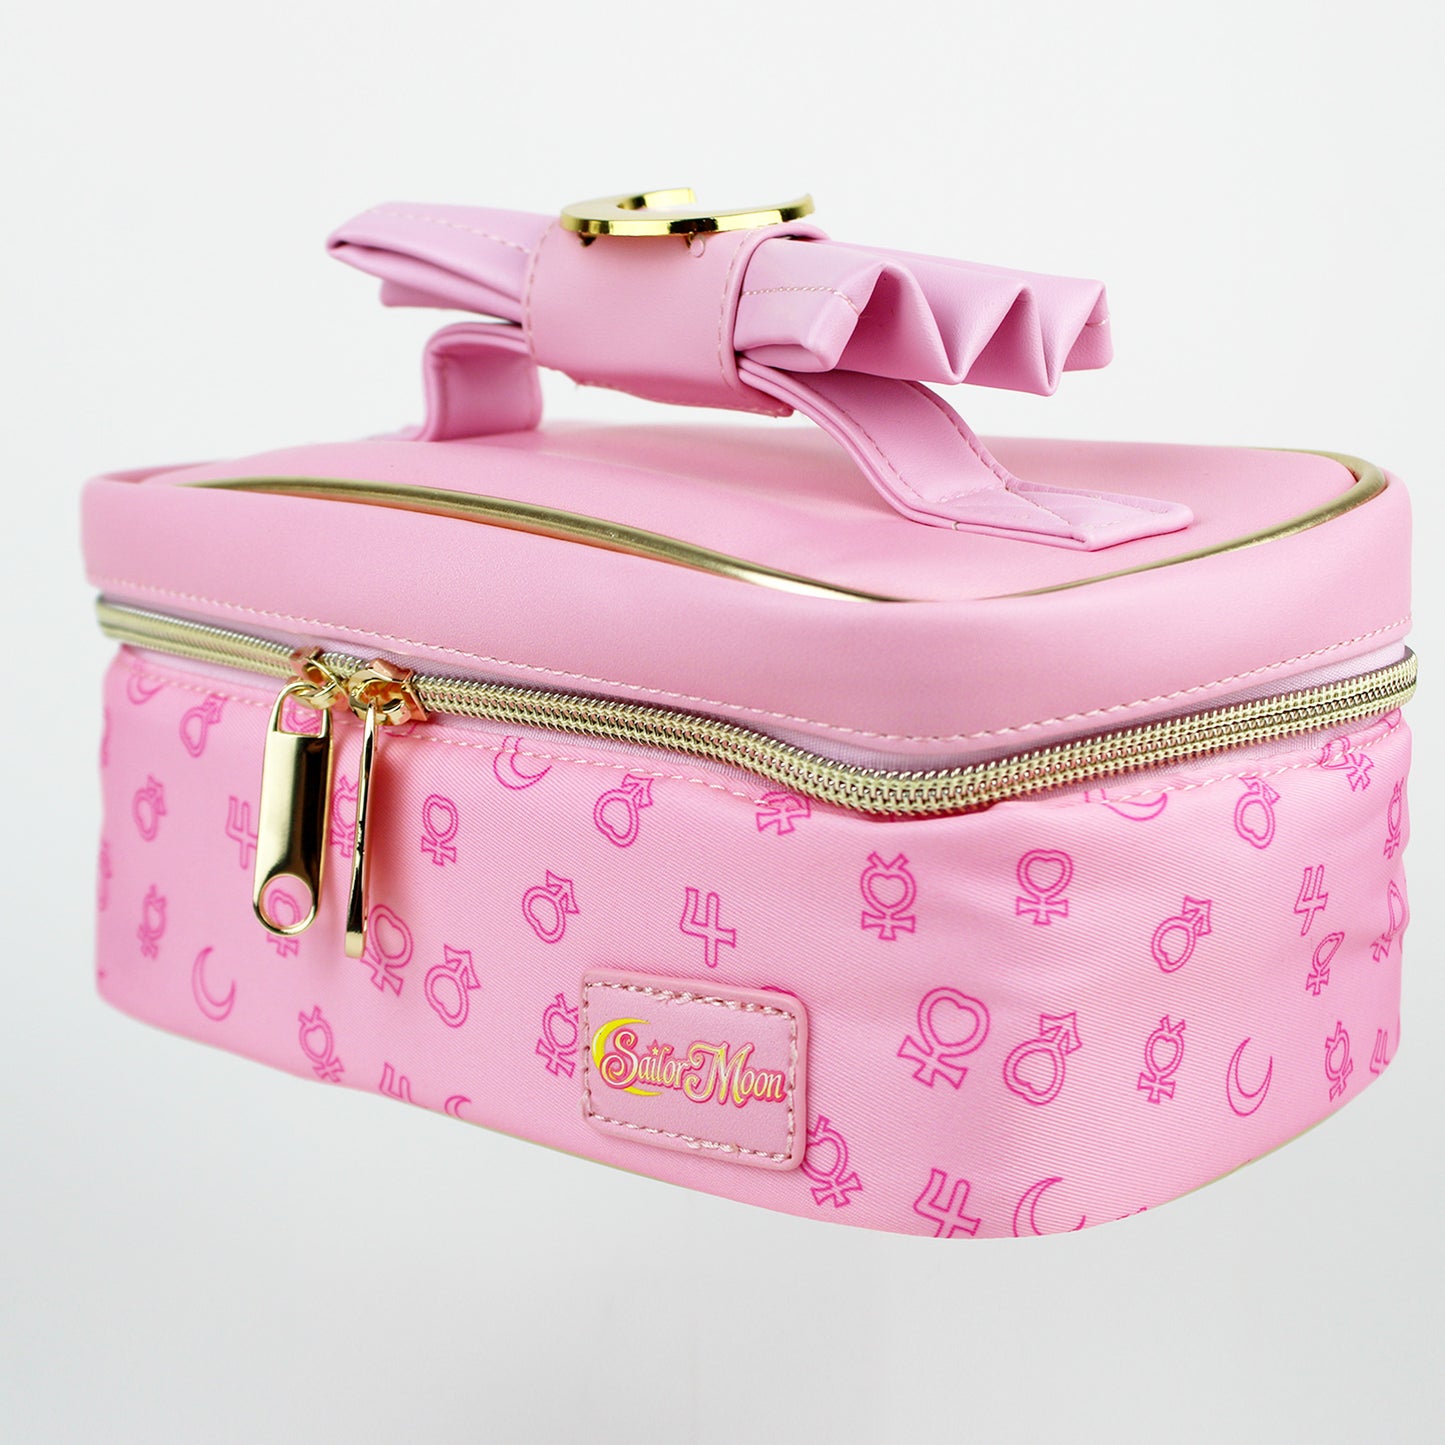 Sailor Moon Travel Cosmetic Bag